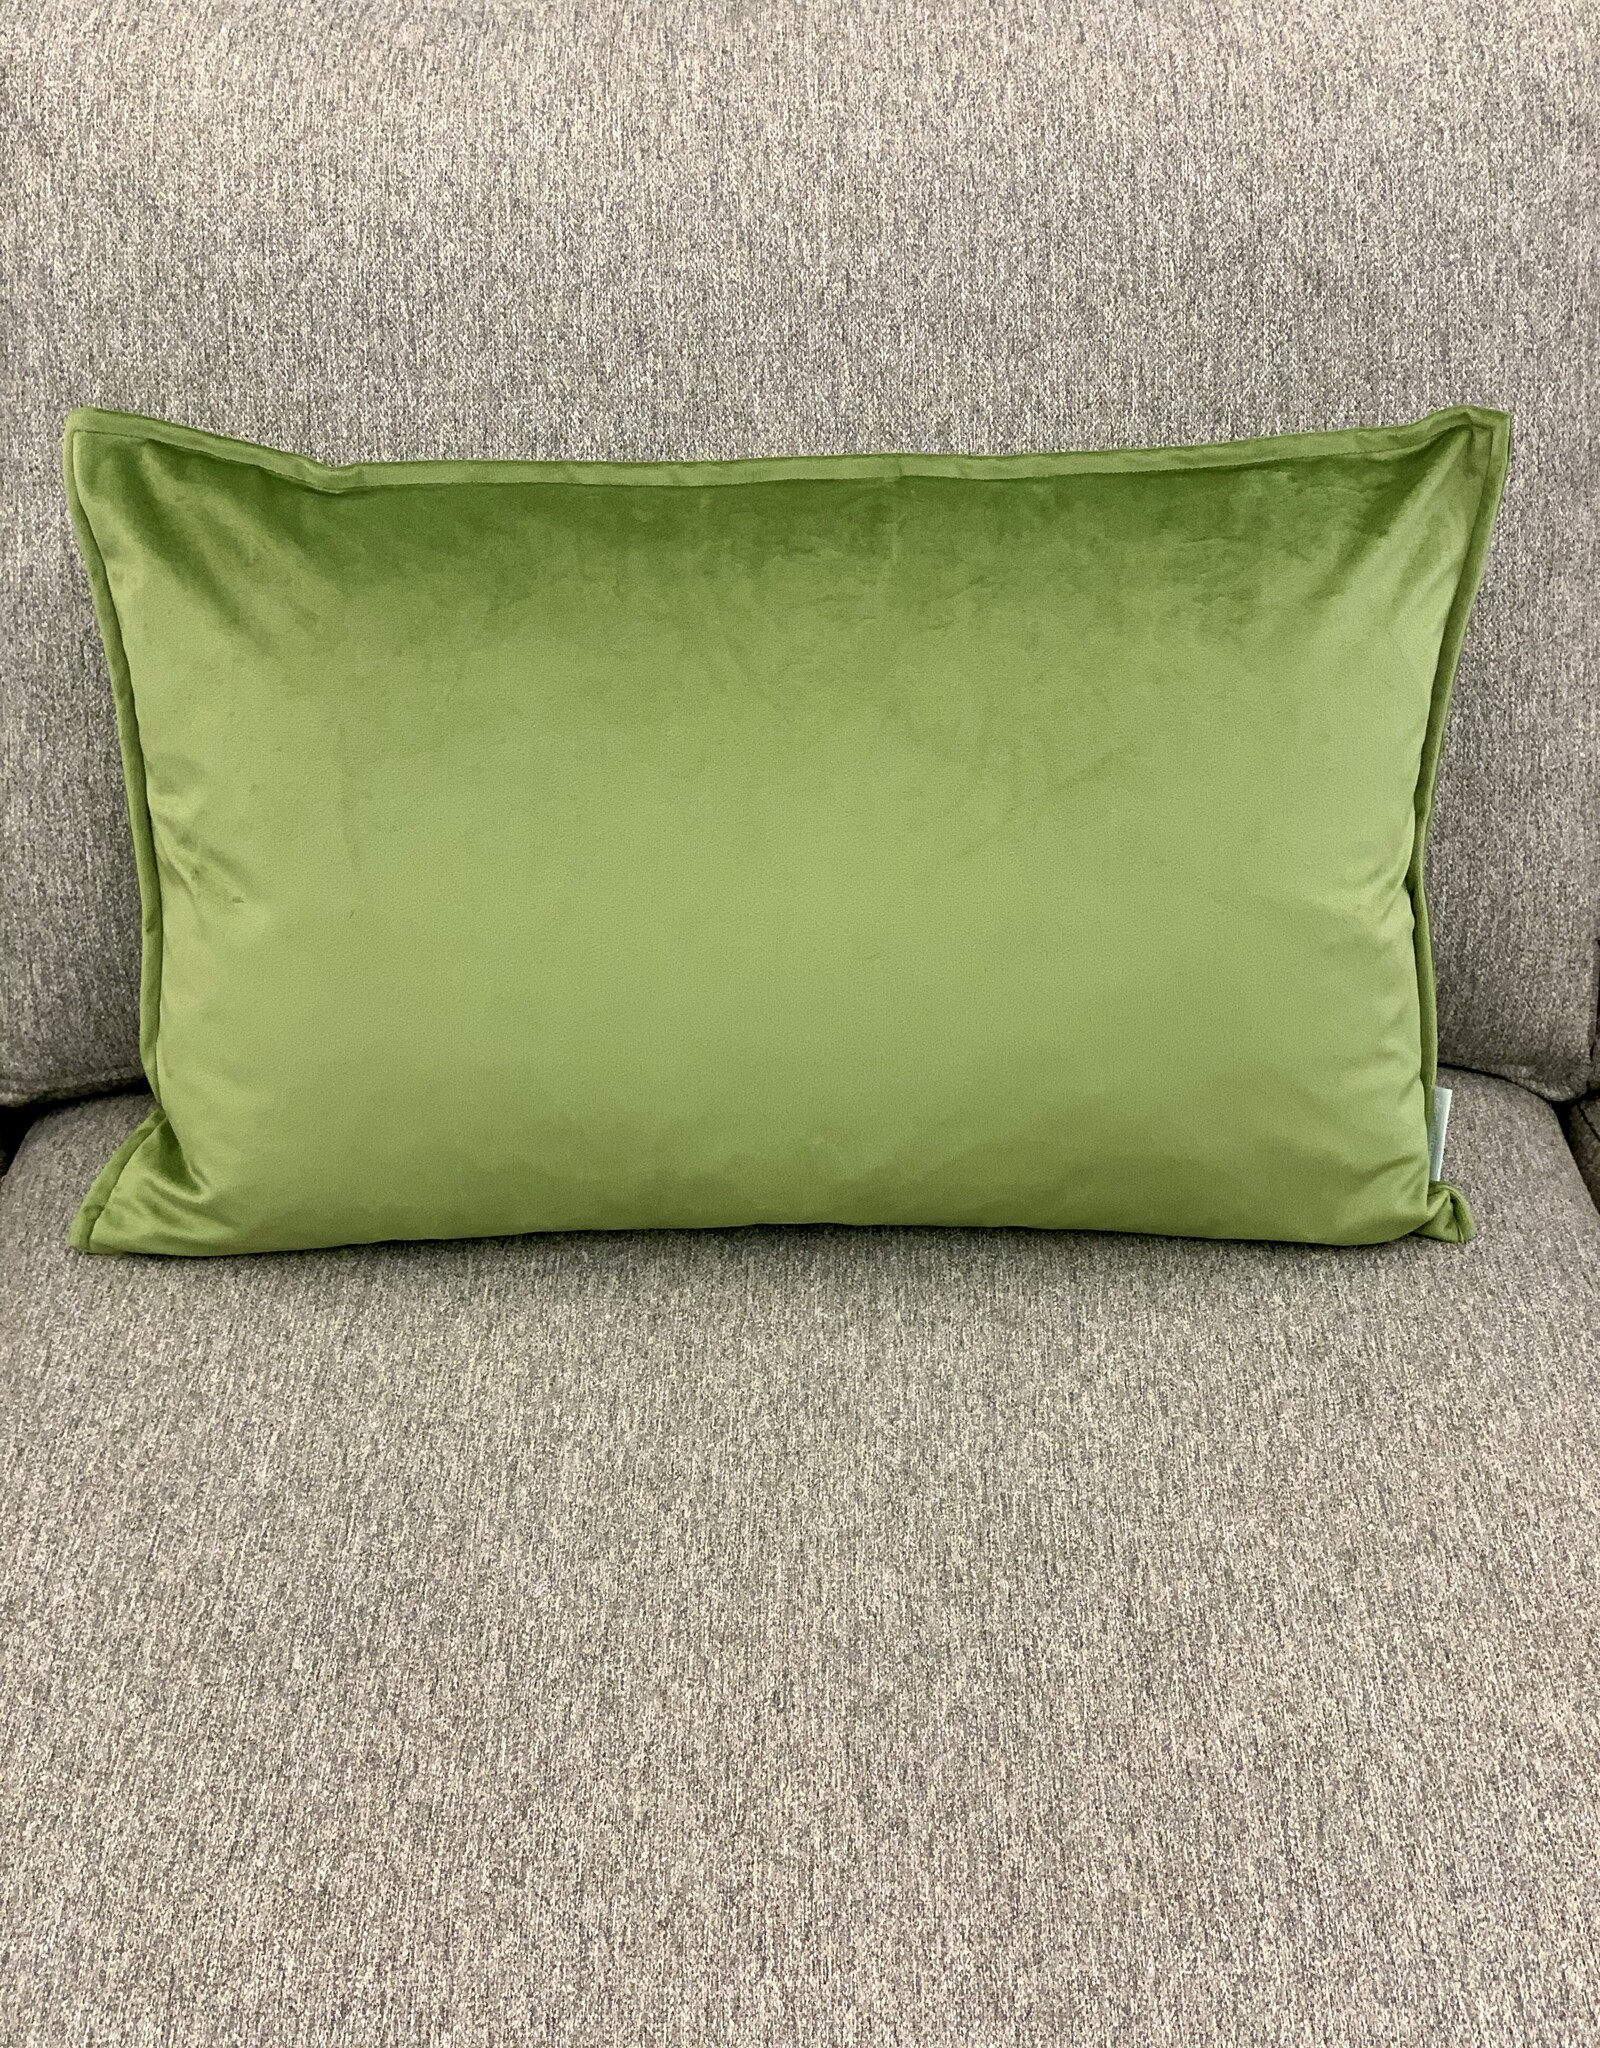 Daniadown Cushions Daniadown Dutch Velvet Spruce Deco 14 x22